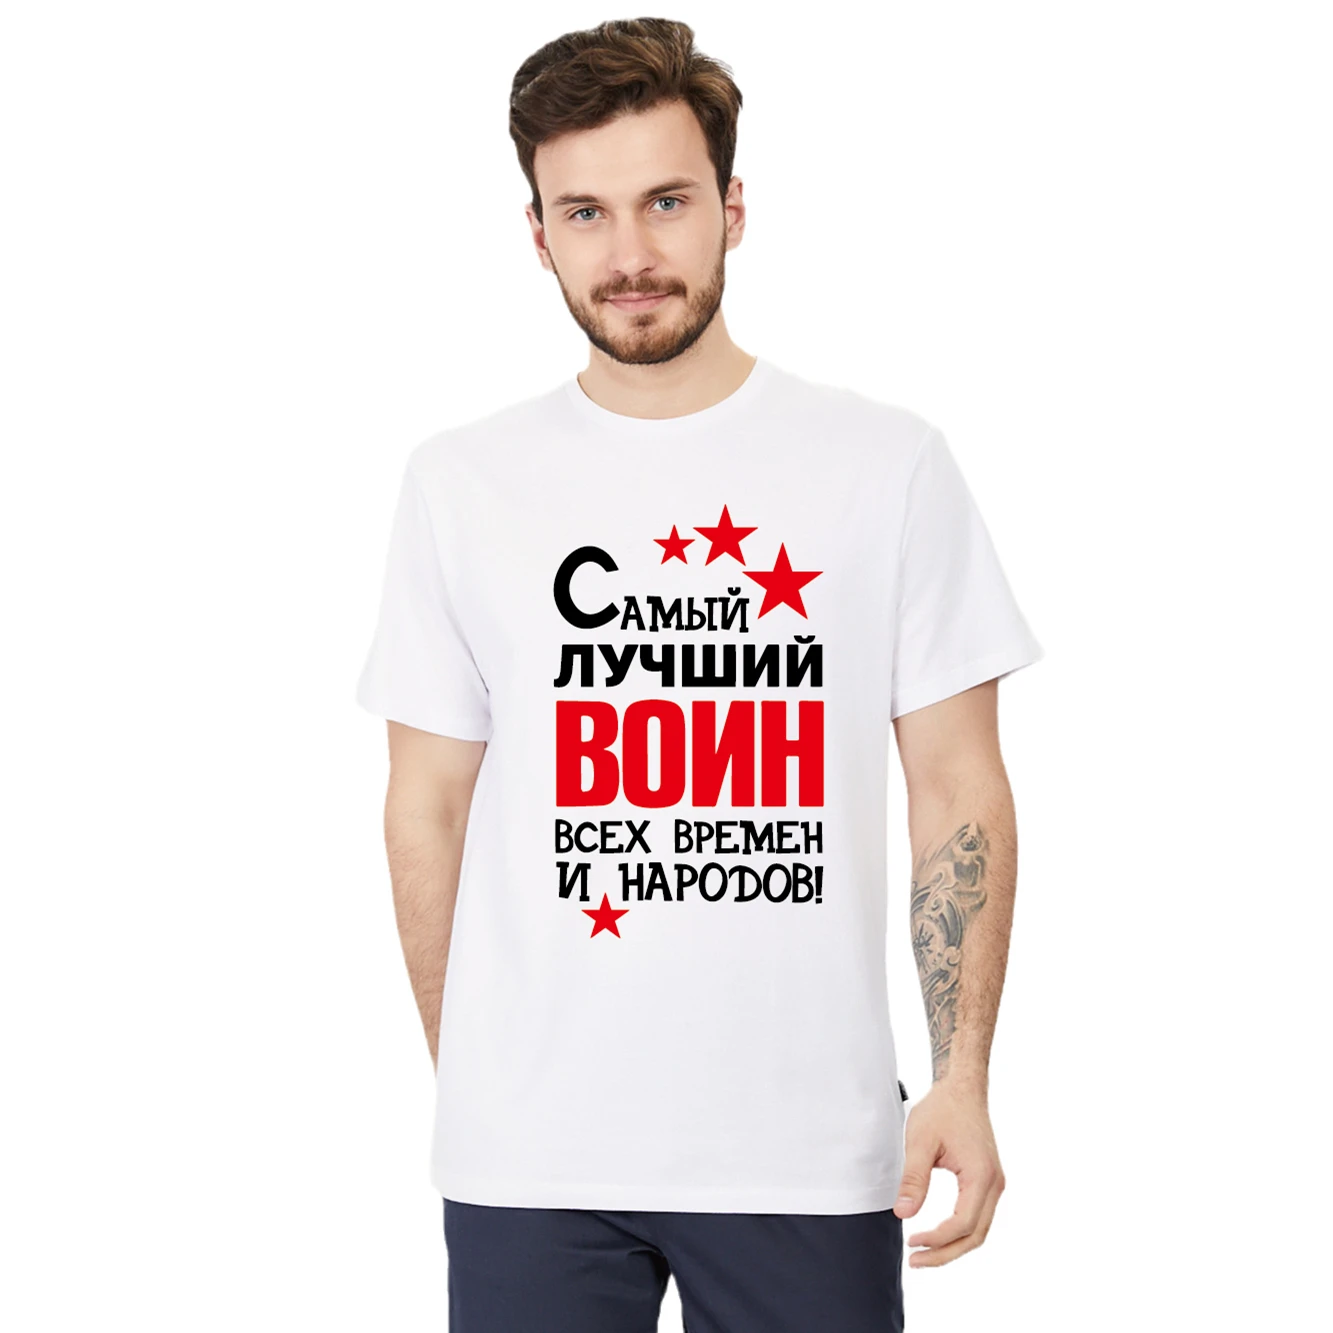 Men's Printed Cotton T-Shirt Самый Лучший Воин Всех Времен И Народов! Fashion Russian Style Shirt Tees Tops Custom Name  - buy with discount